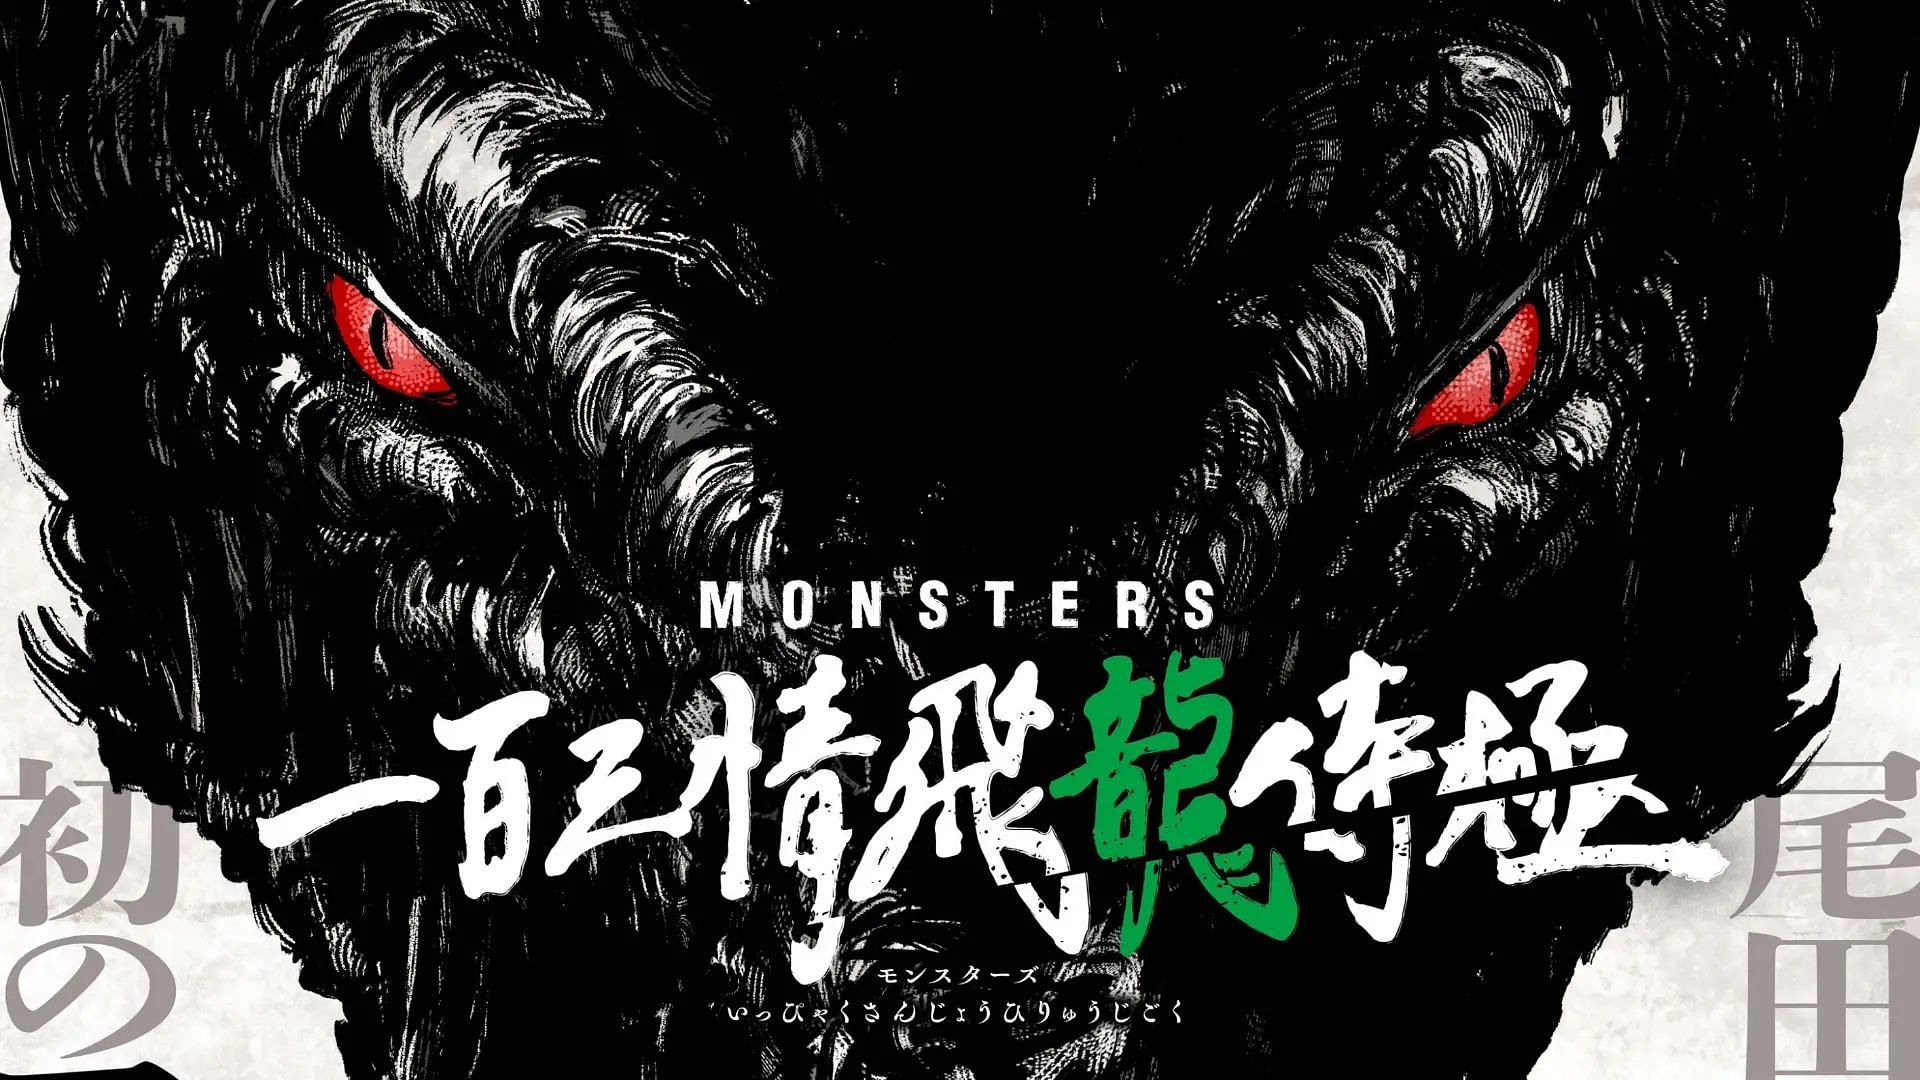 Monsters by Eiichiro Oda (Image via E&amp;H Production)